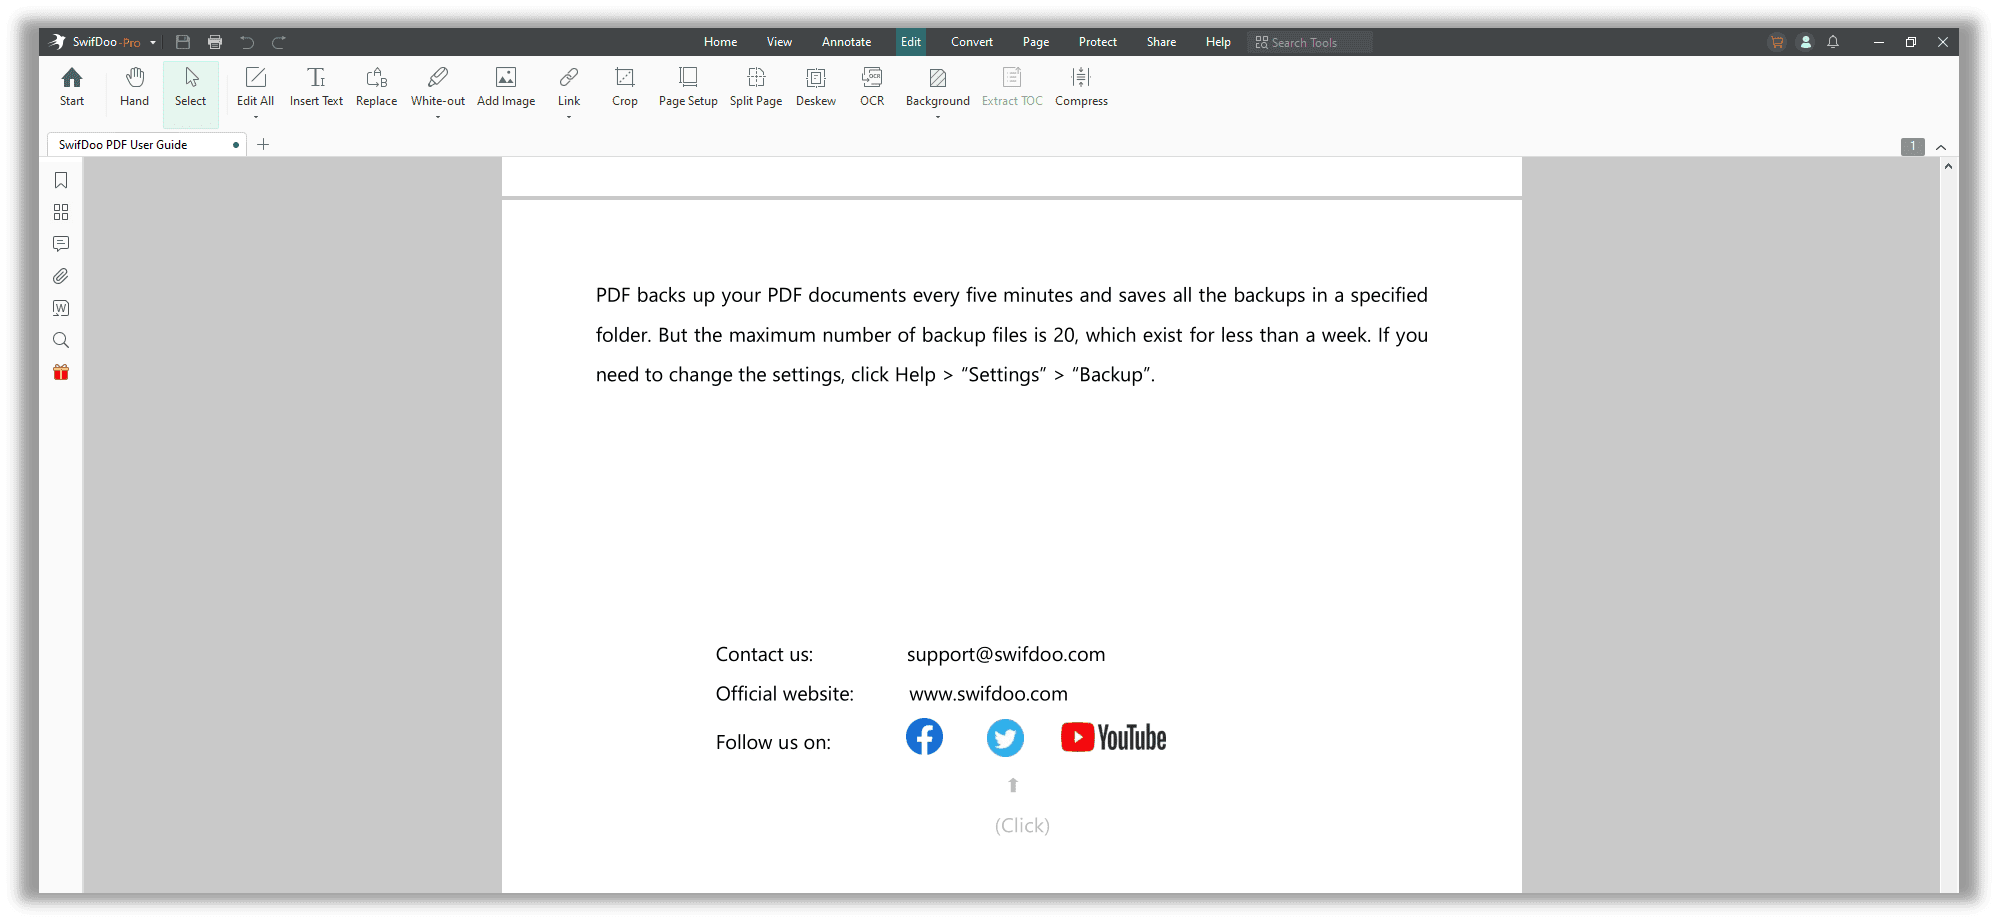 How to edit a PDF in SwifDoo PDF